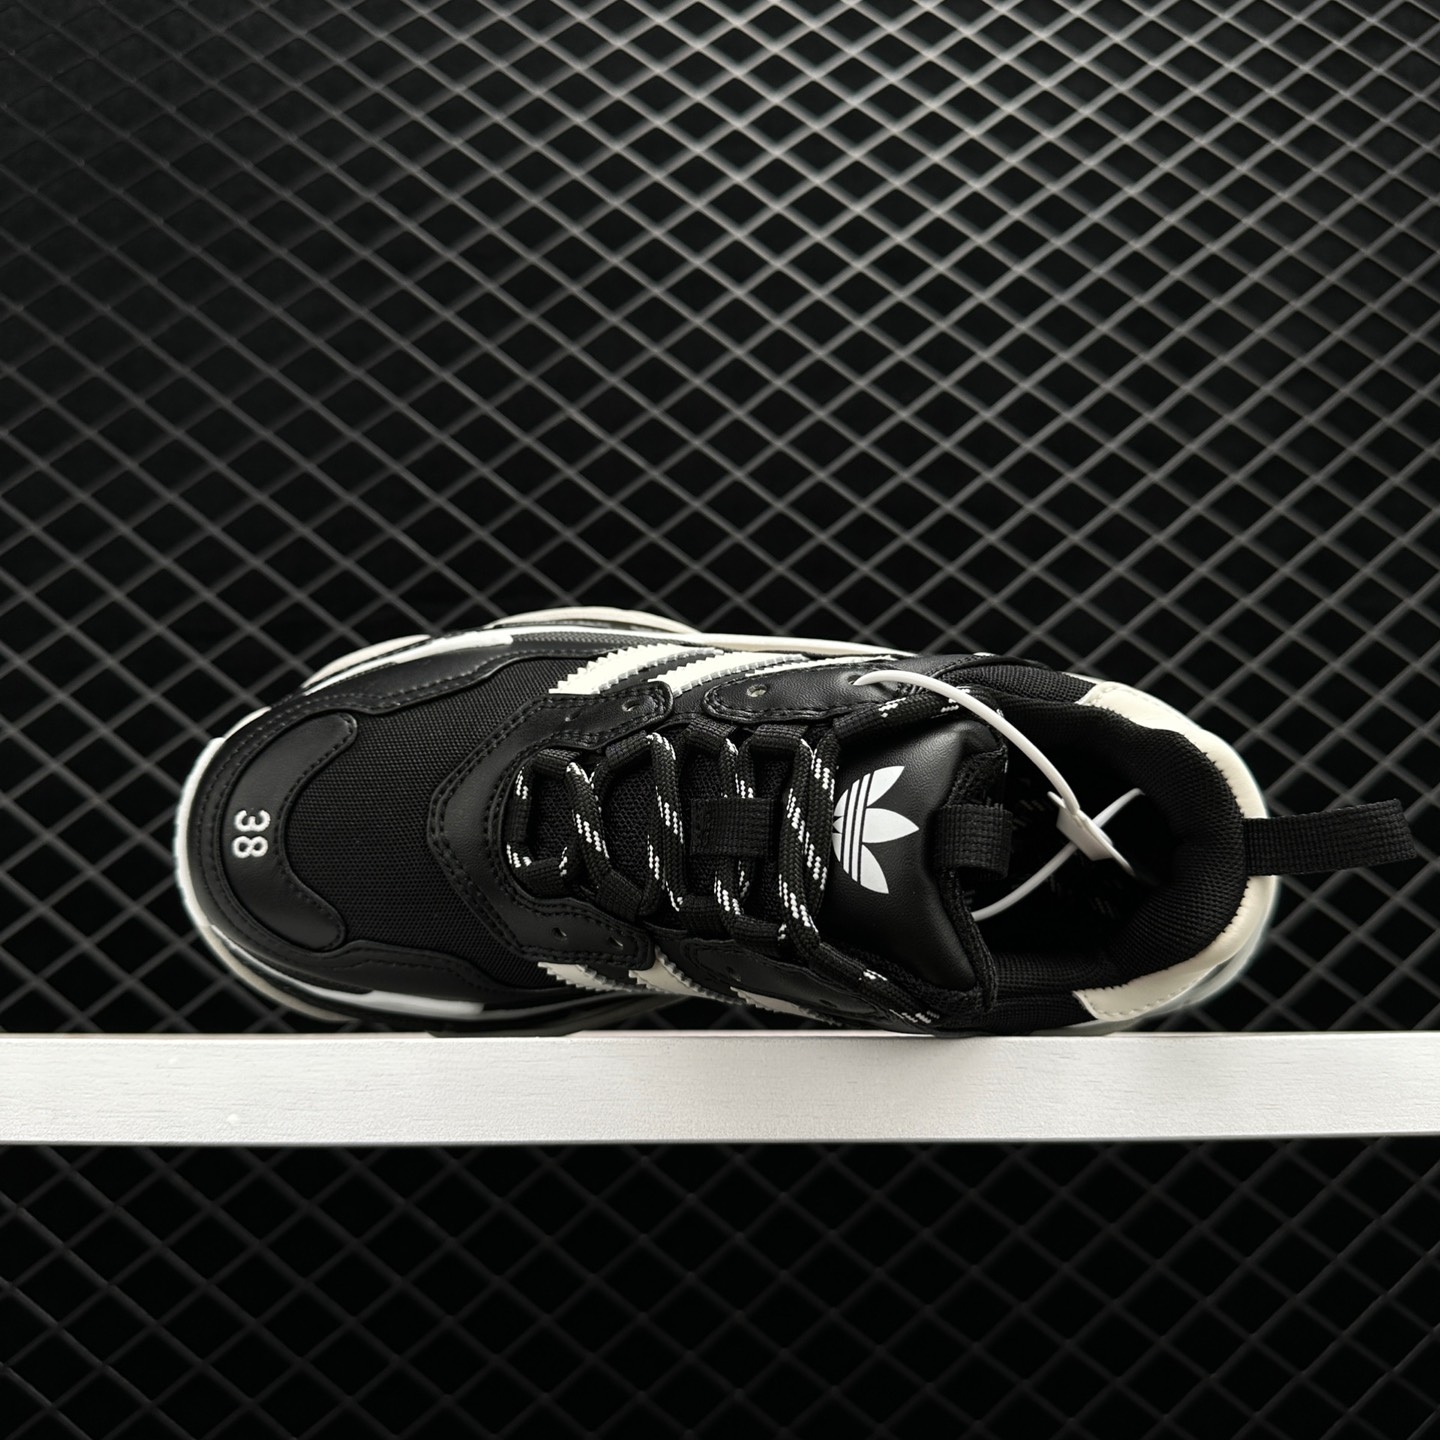 Balenciaga x Adidas Triple S Sneaker - Stylish and Versatile Footwear